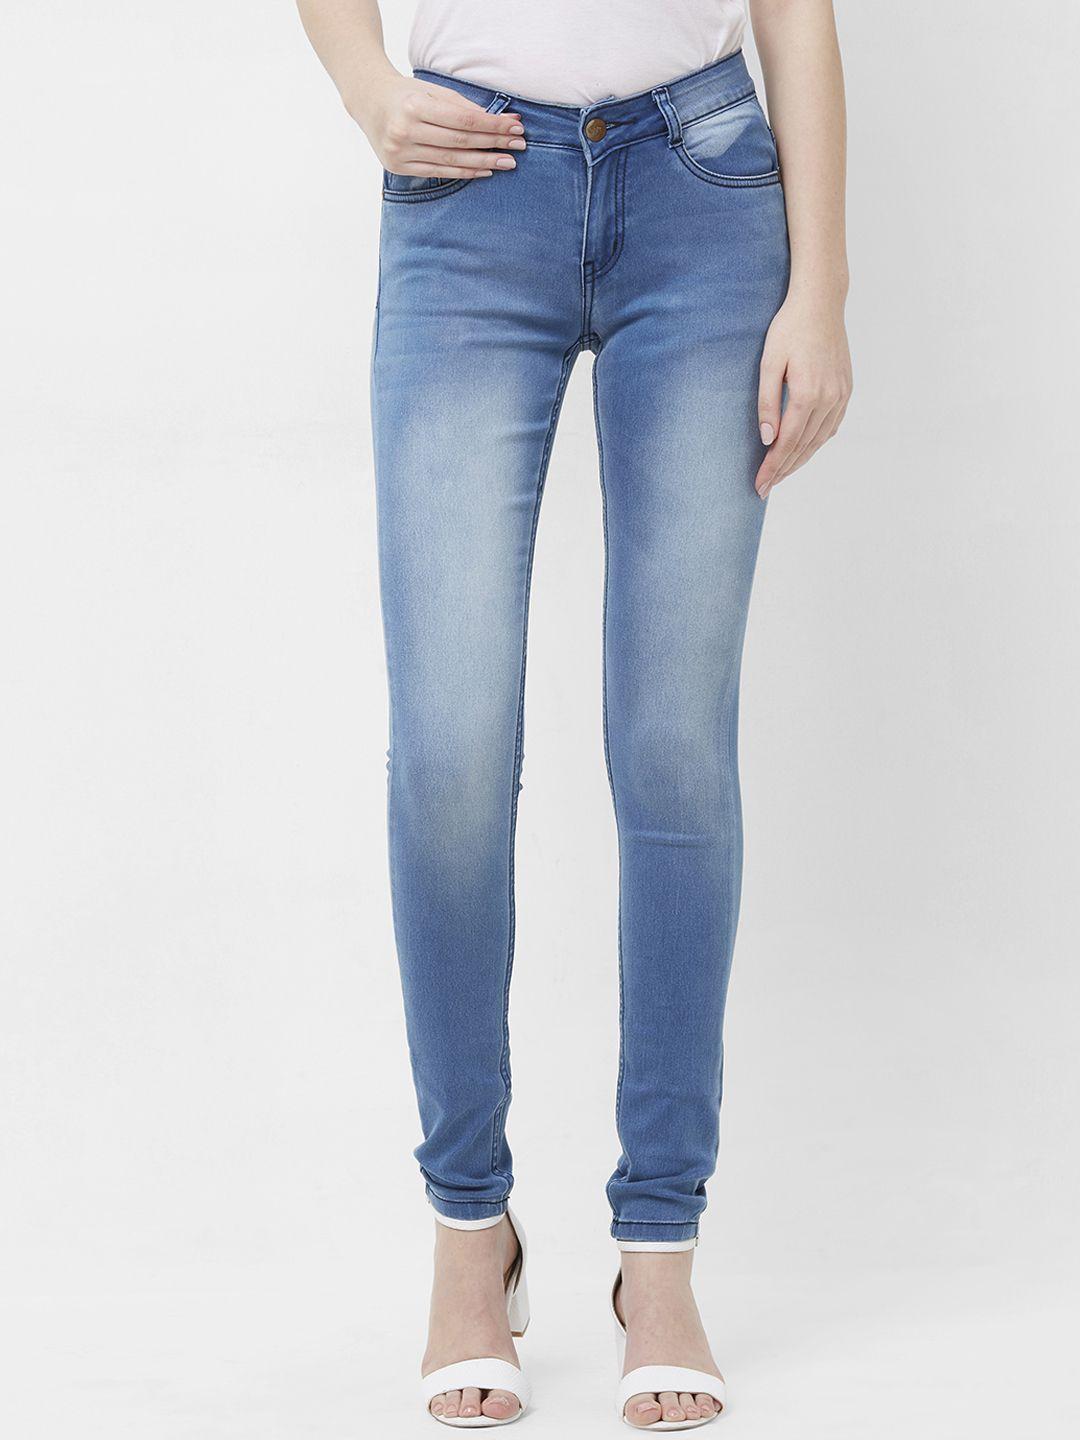 109f-women-blue-regular-fit-mid-rise-clean-look-jeans